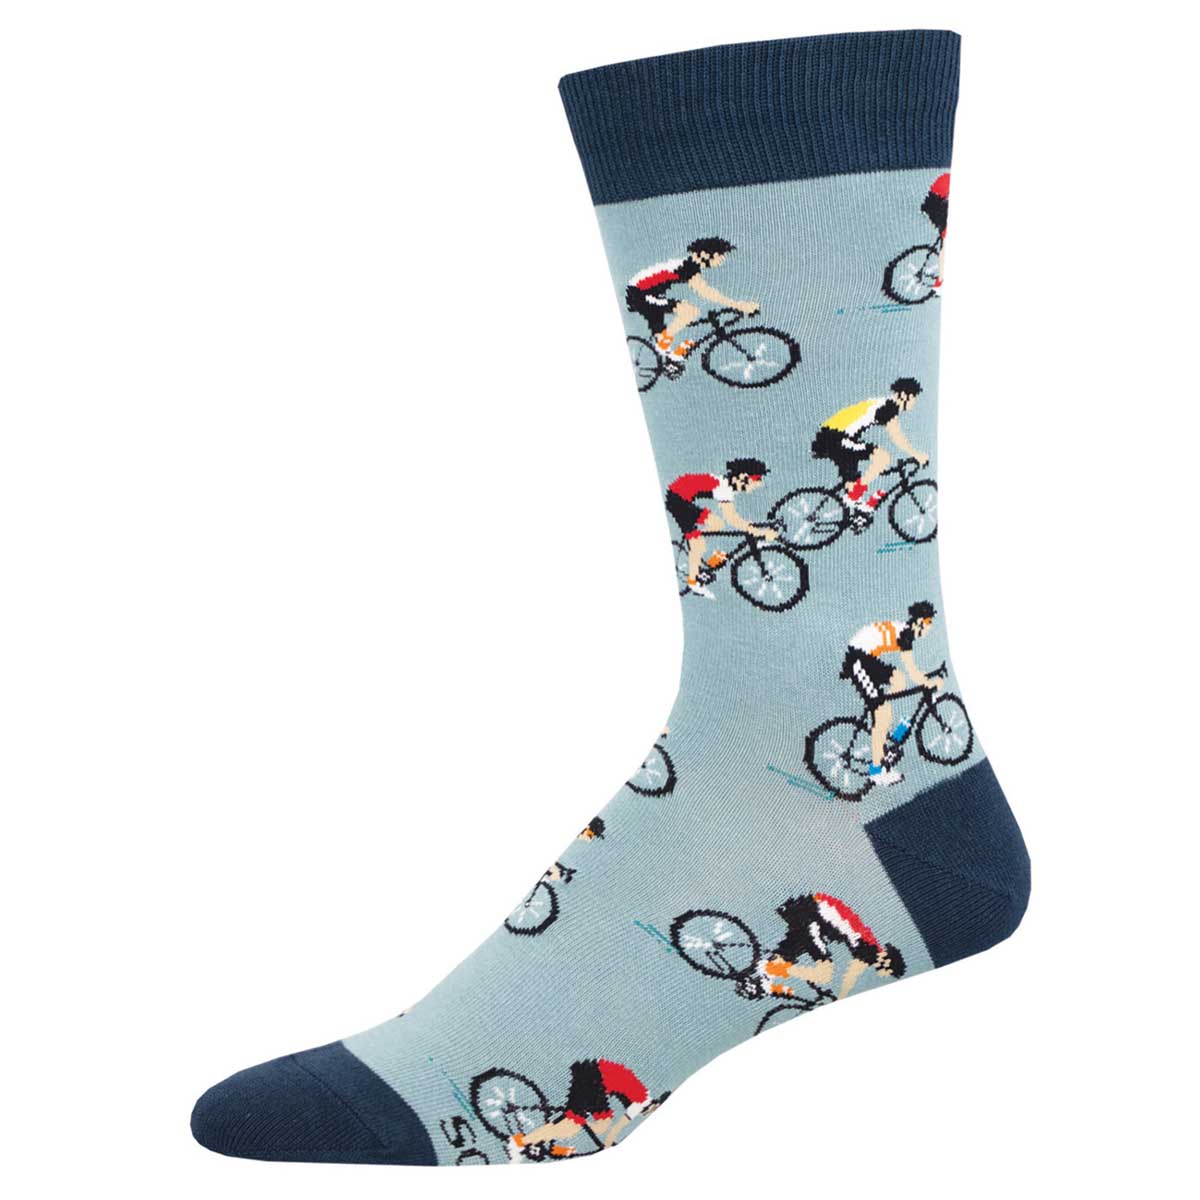 Men's Cycling Socks